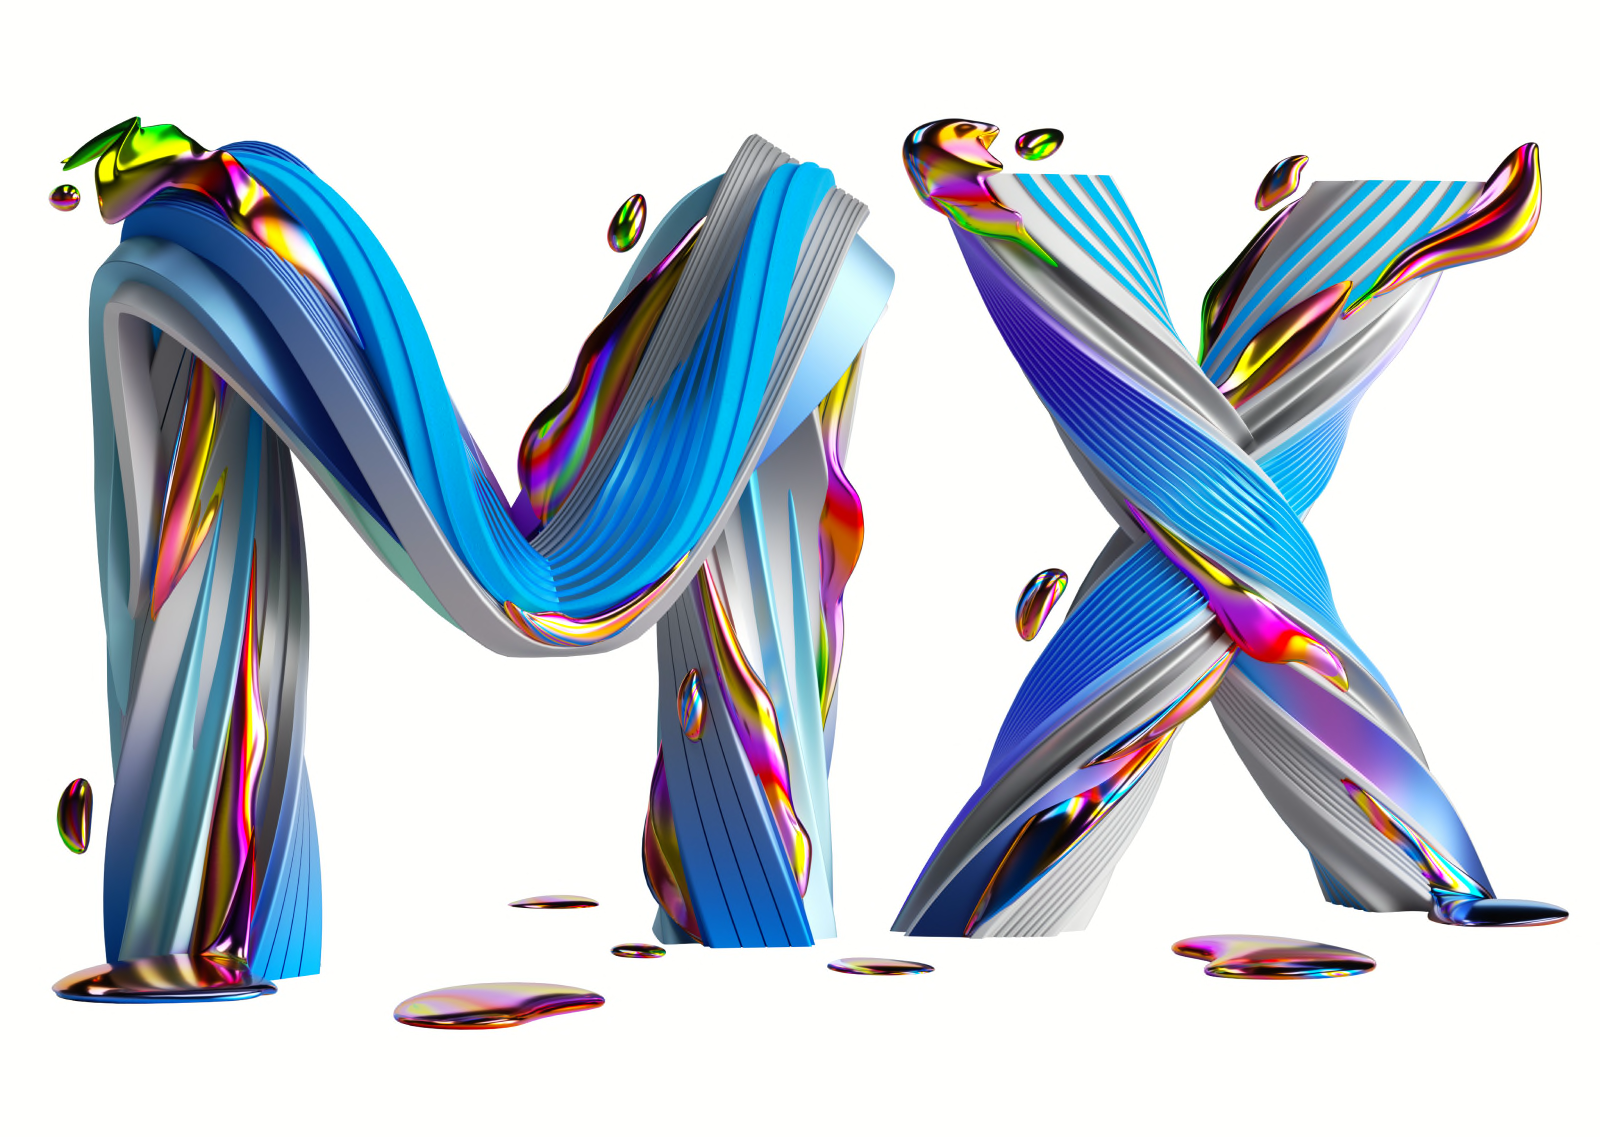 MX Series-ikonet